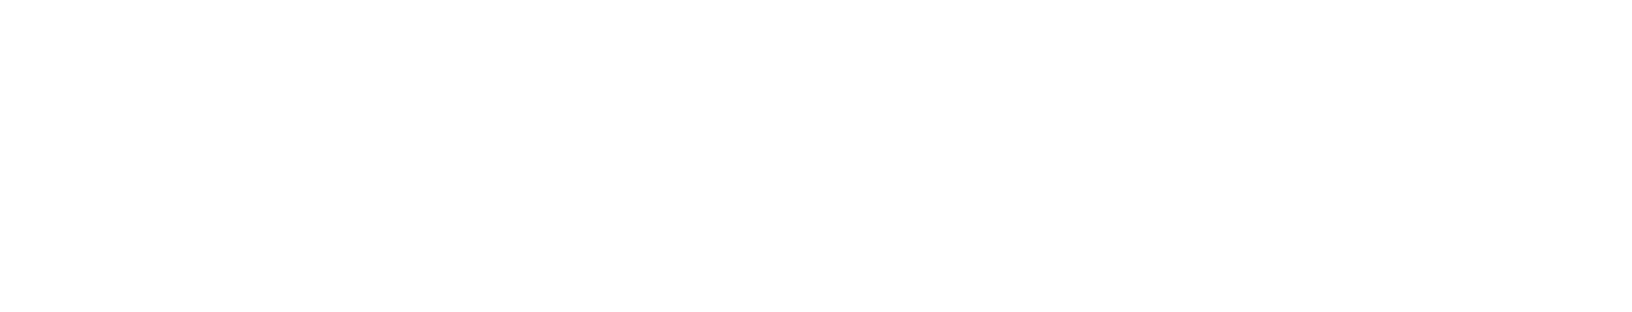 Zingaro-and-Cretella-Law-bmindfulweb-Logo-Final-2023-Newtown-New-Haven-Horizontal-White